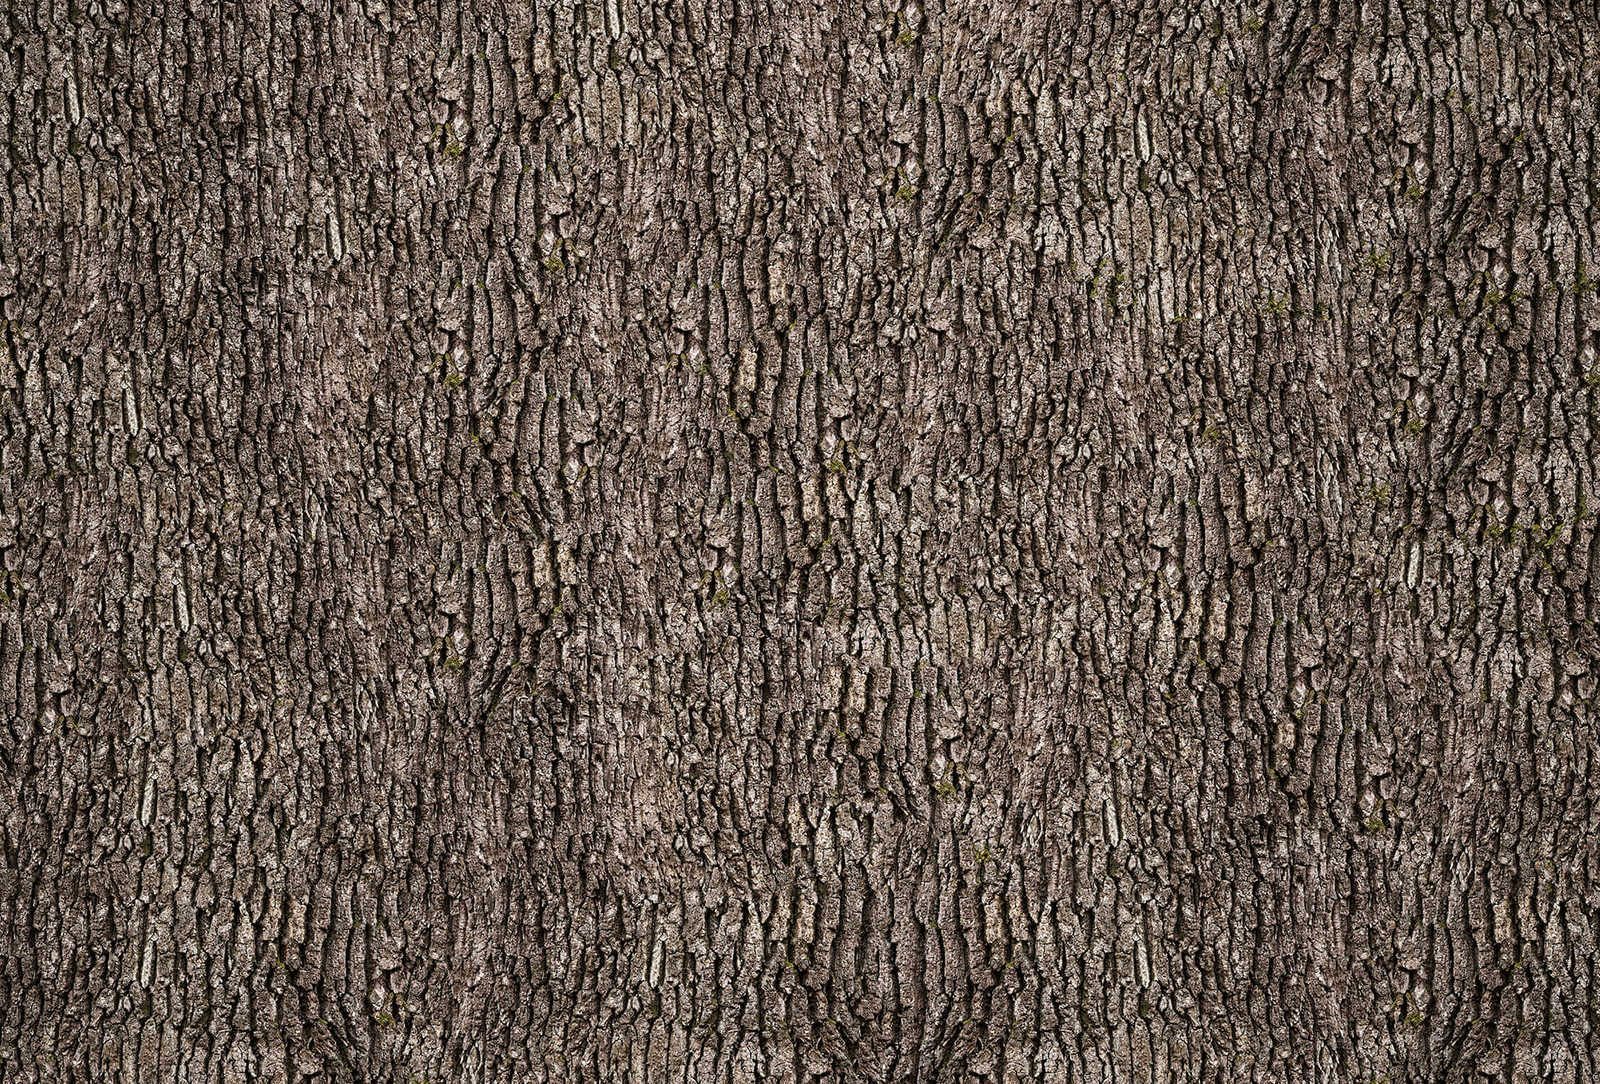         Bark wall on photo wallpaper - Brown, Grey
    